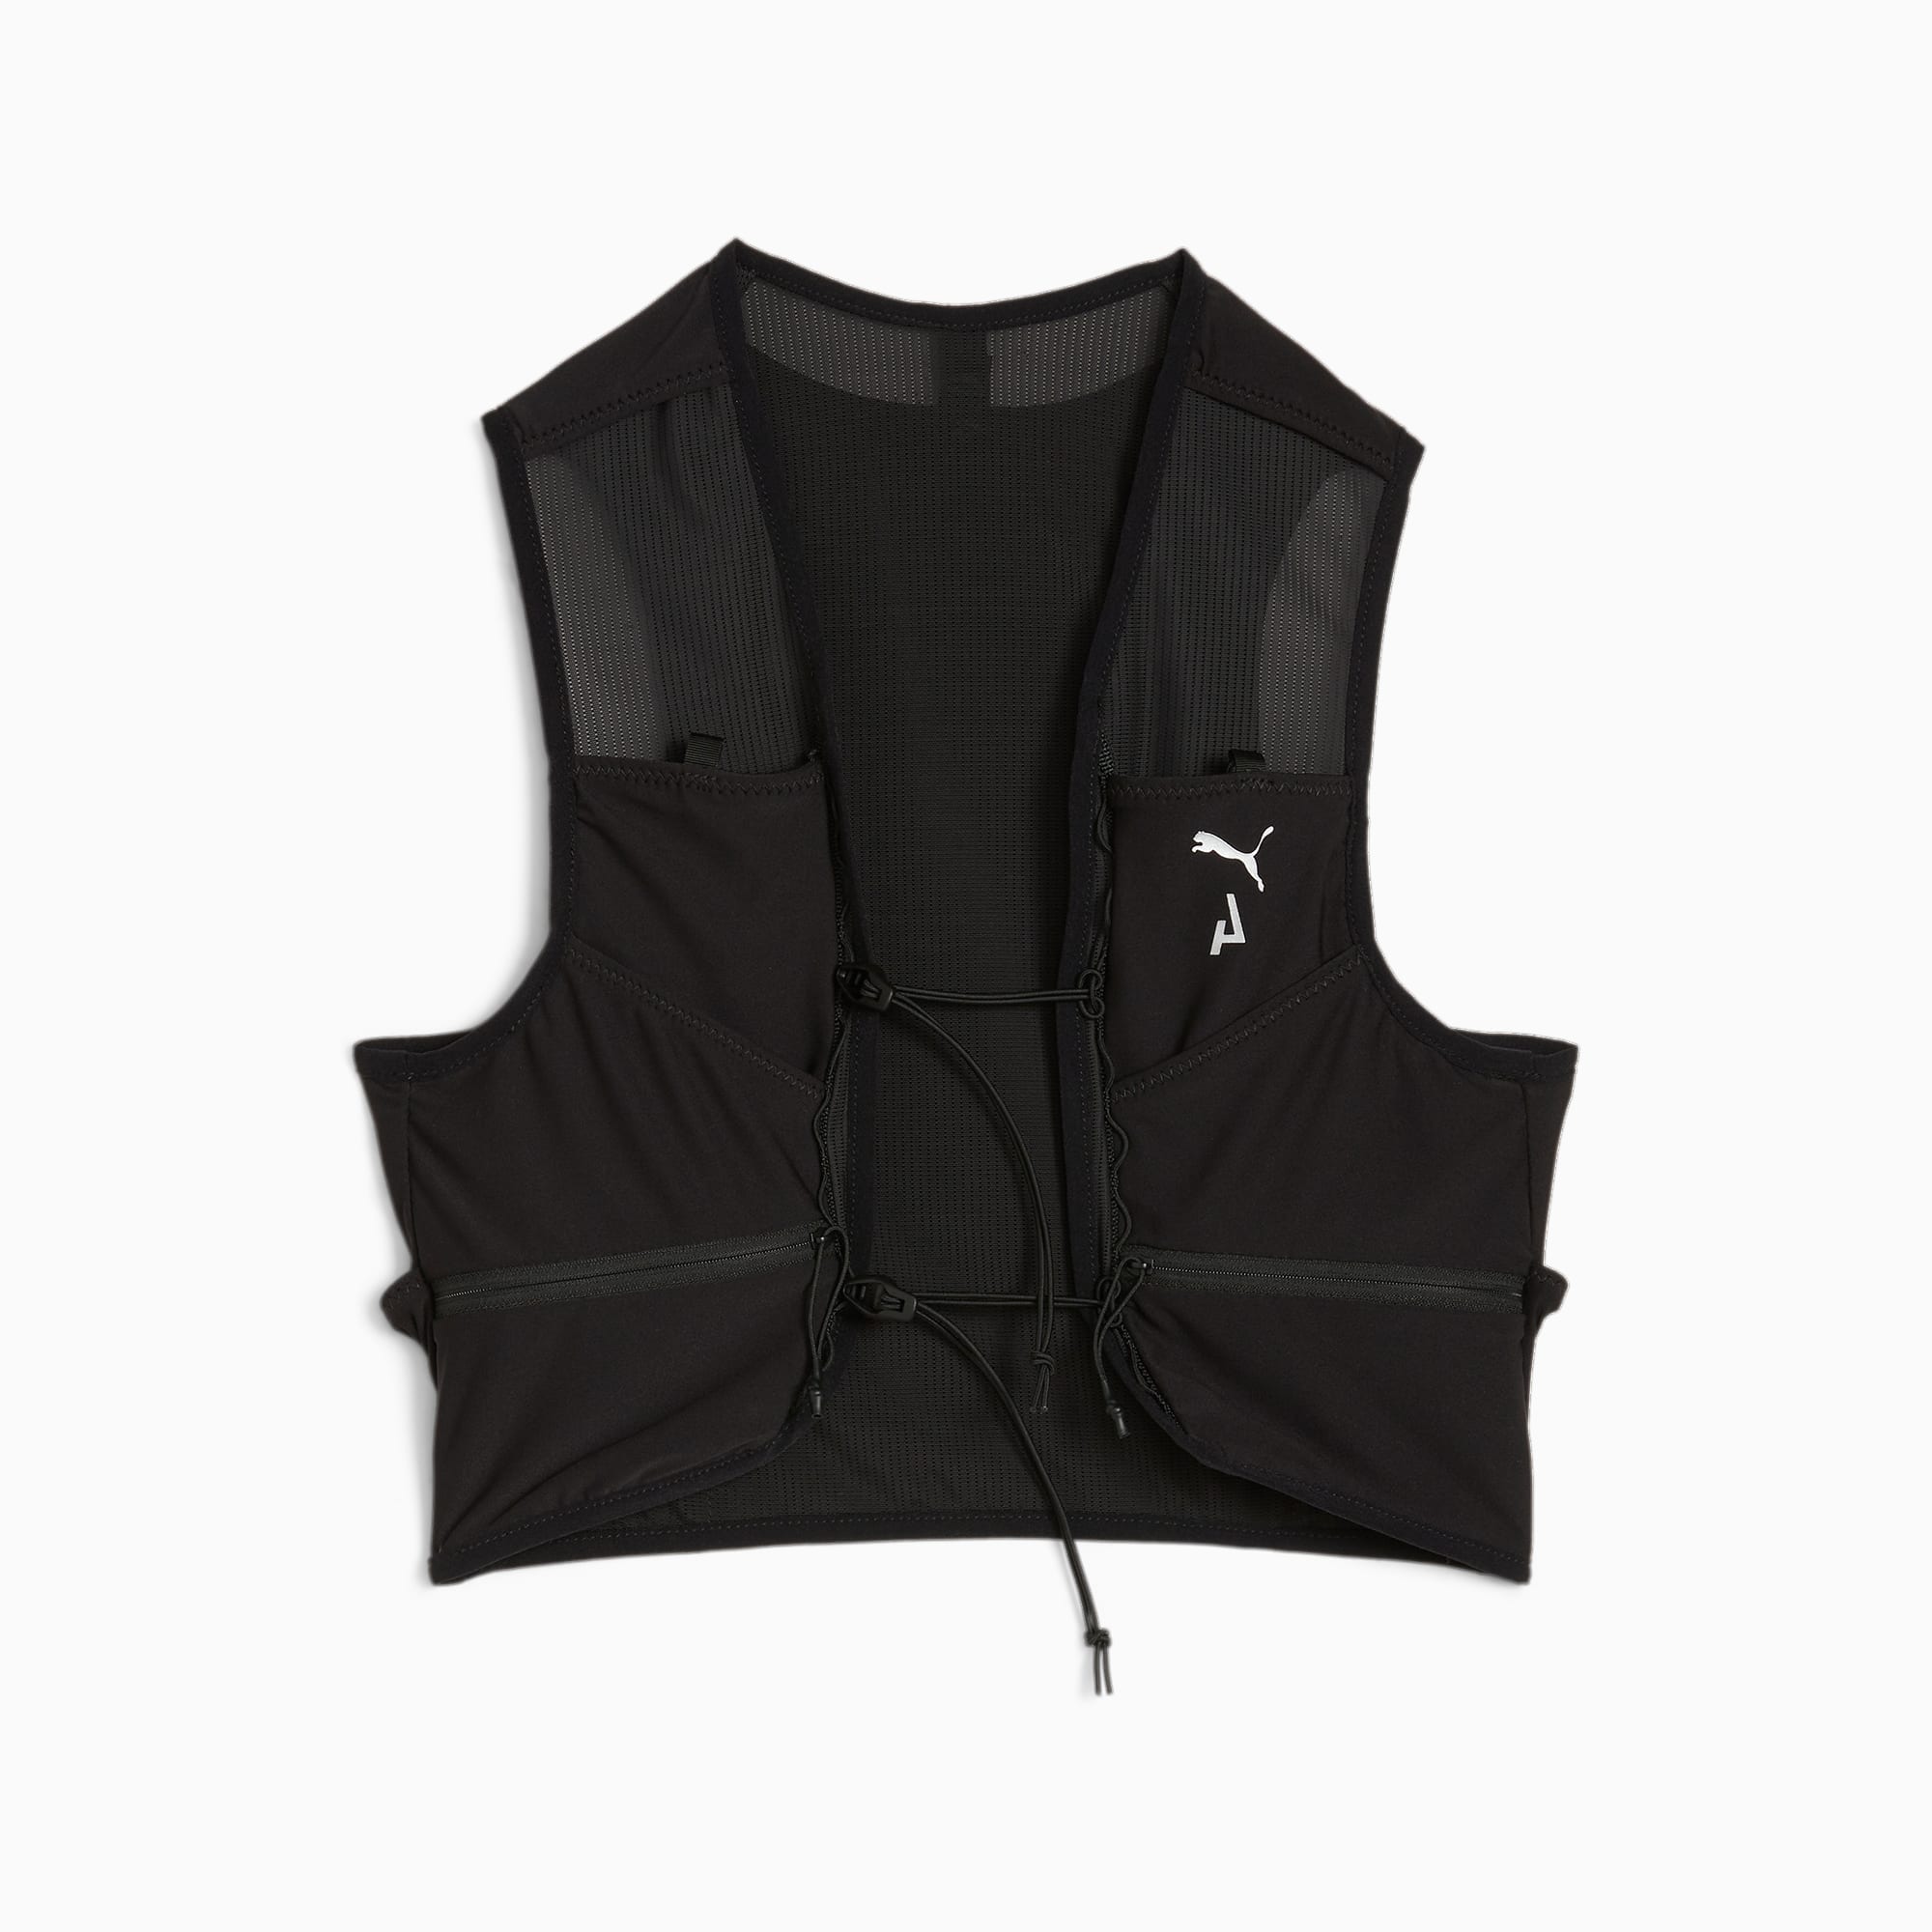 PUMA Seasons Trail Running Vest Women's Jacket, Black, Size S/M, Clothing